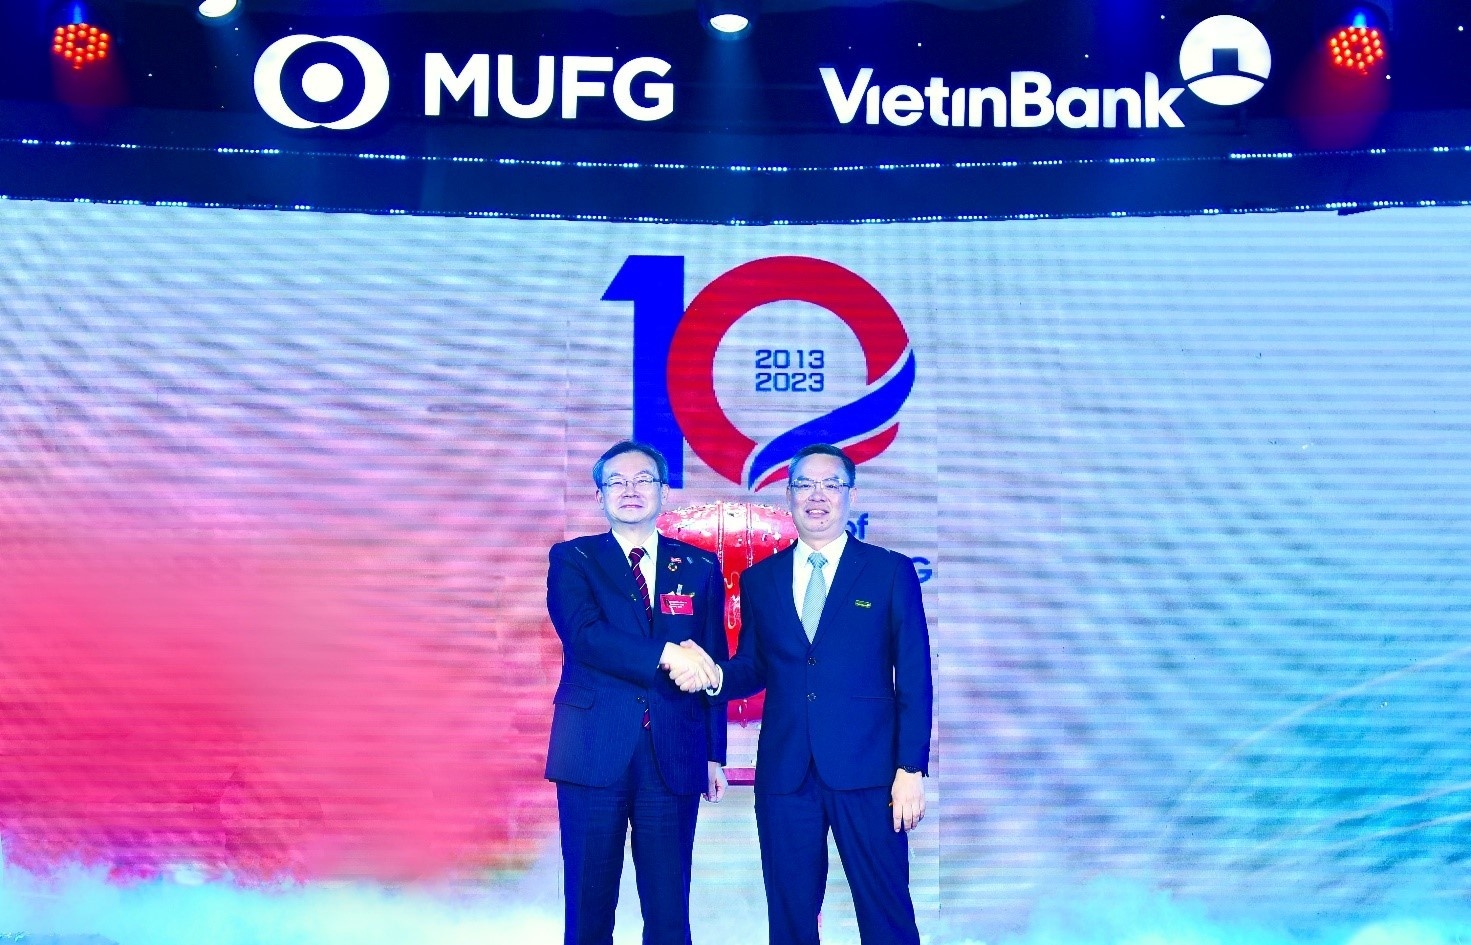 VietinBank and MUFG Bank celebrate 10 years of strategic alliance